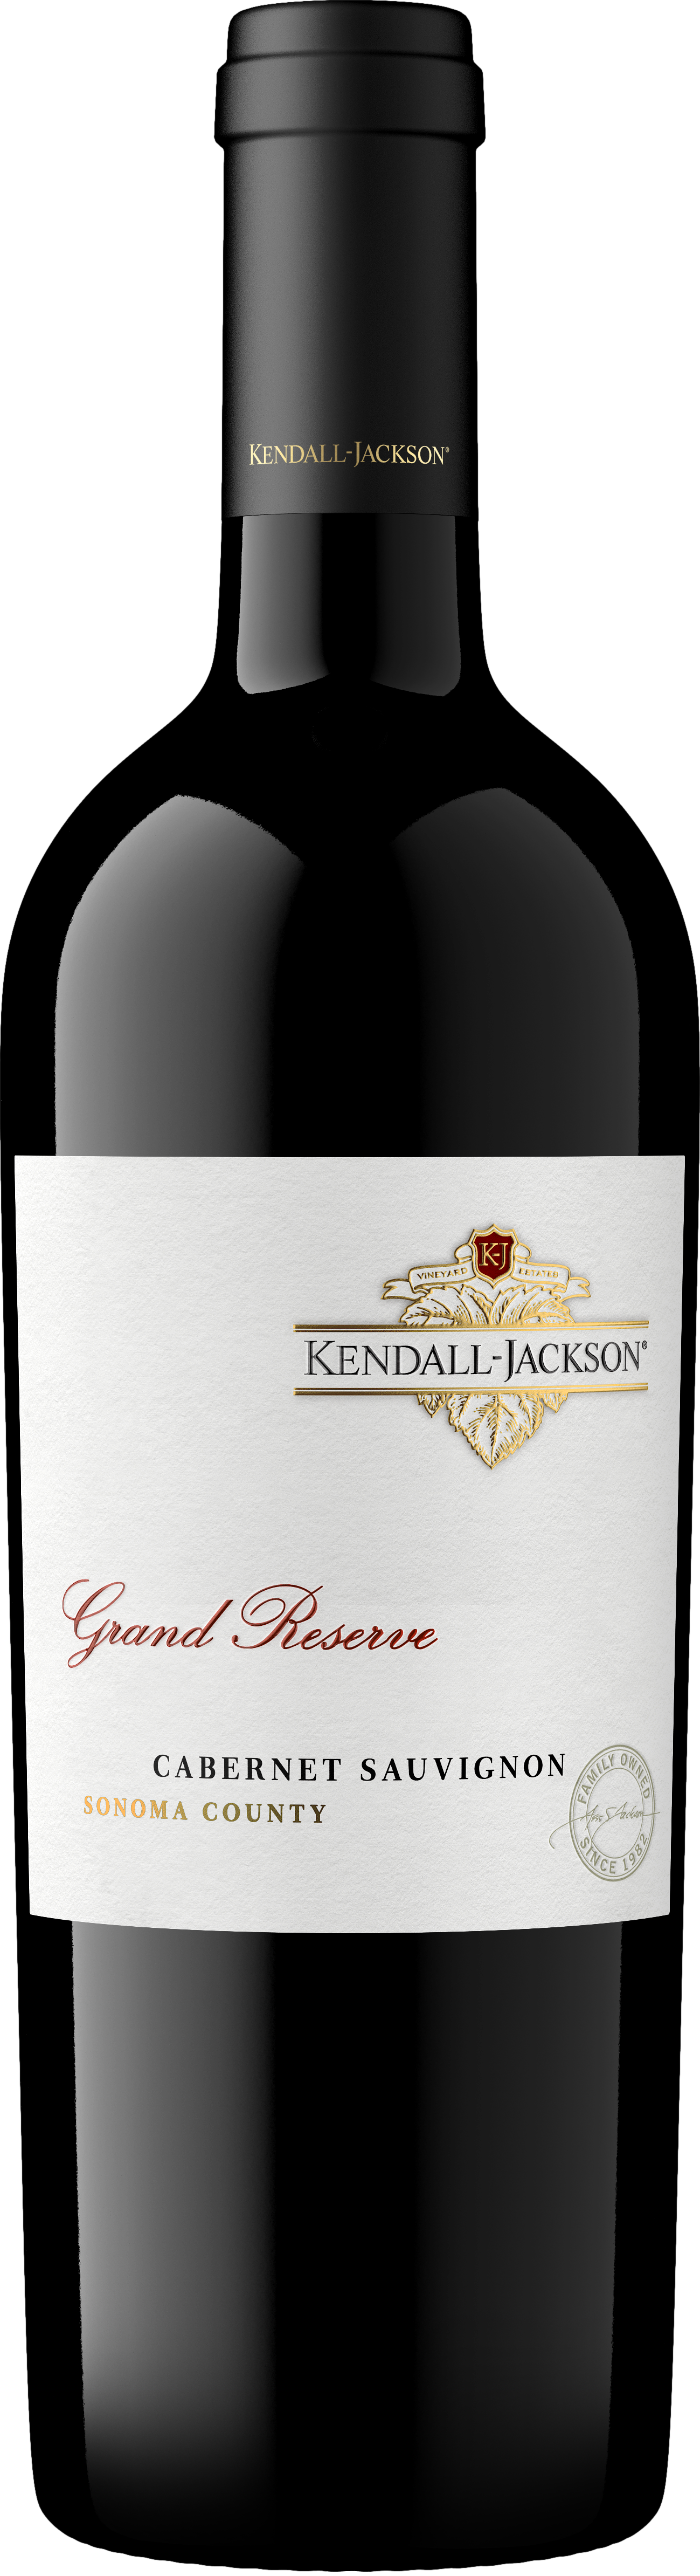 Kendall-Jackson Grand Reserve Cabernet Sauvignon 2018